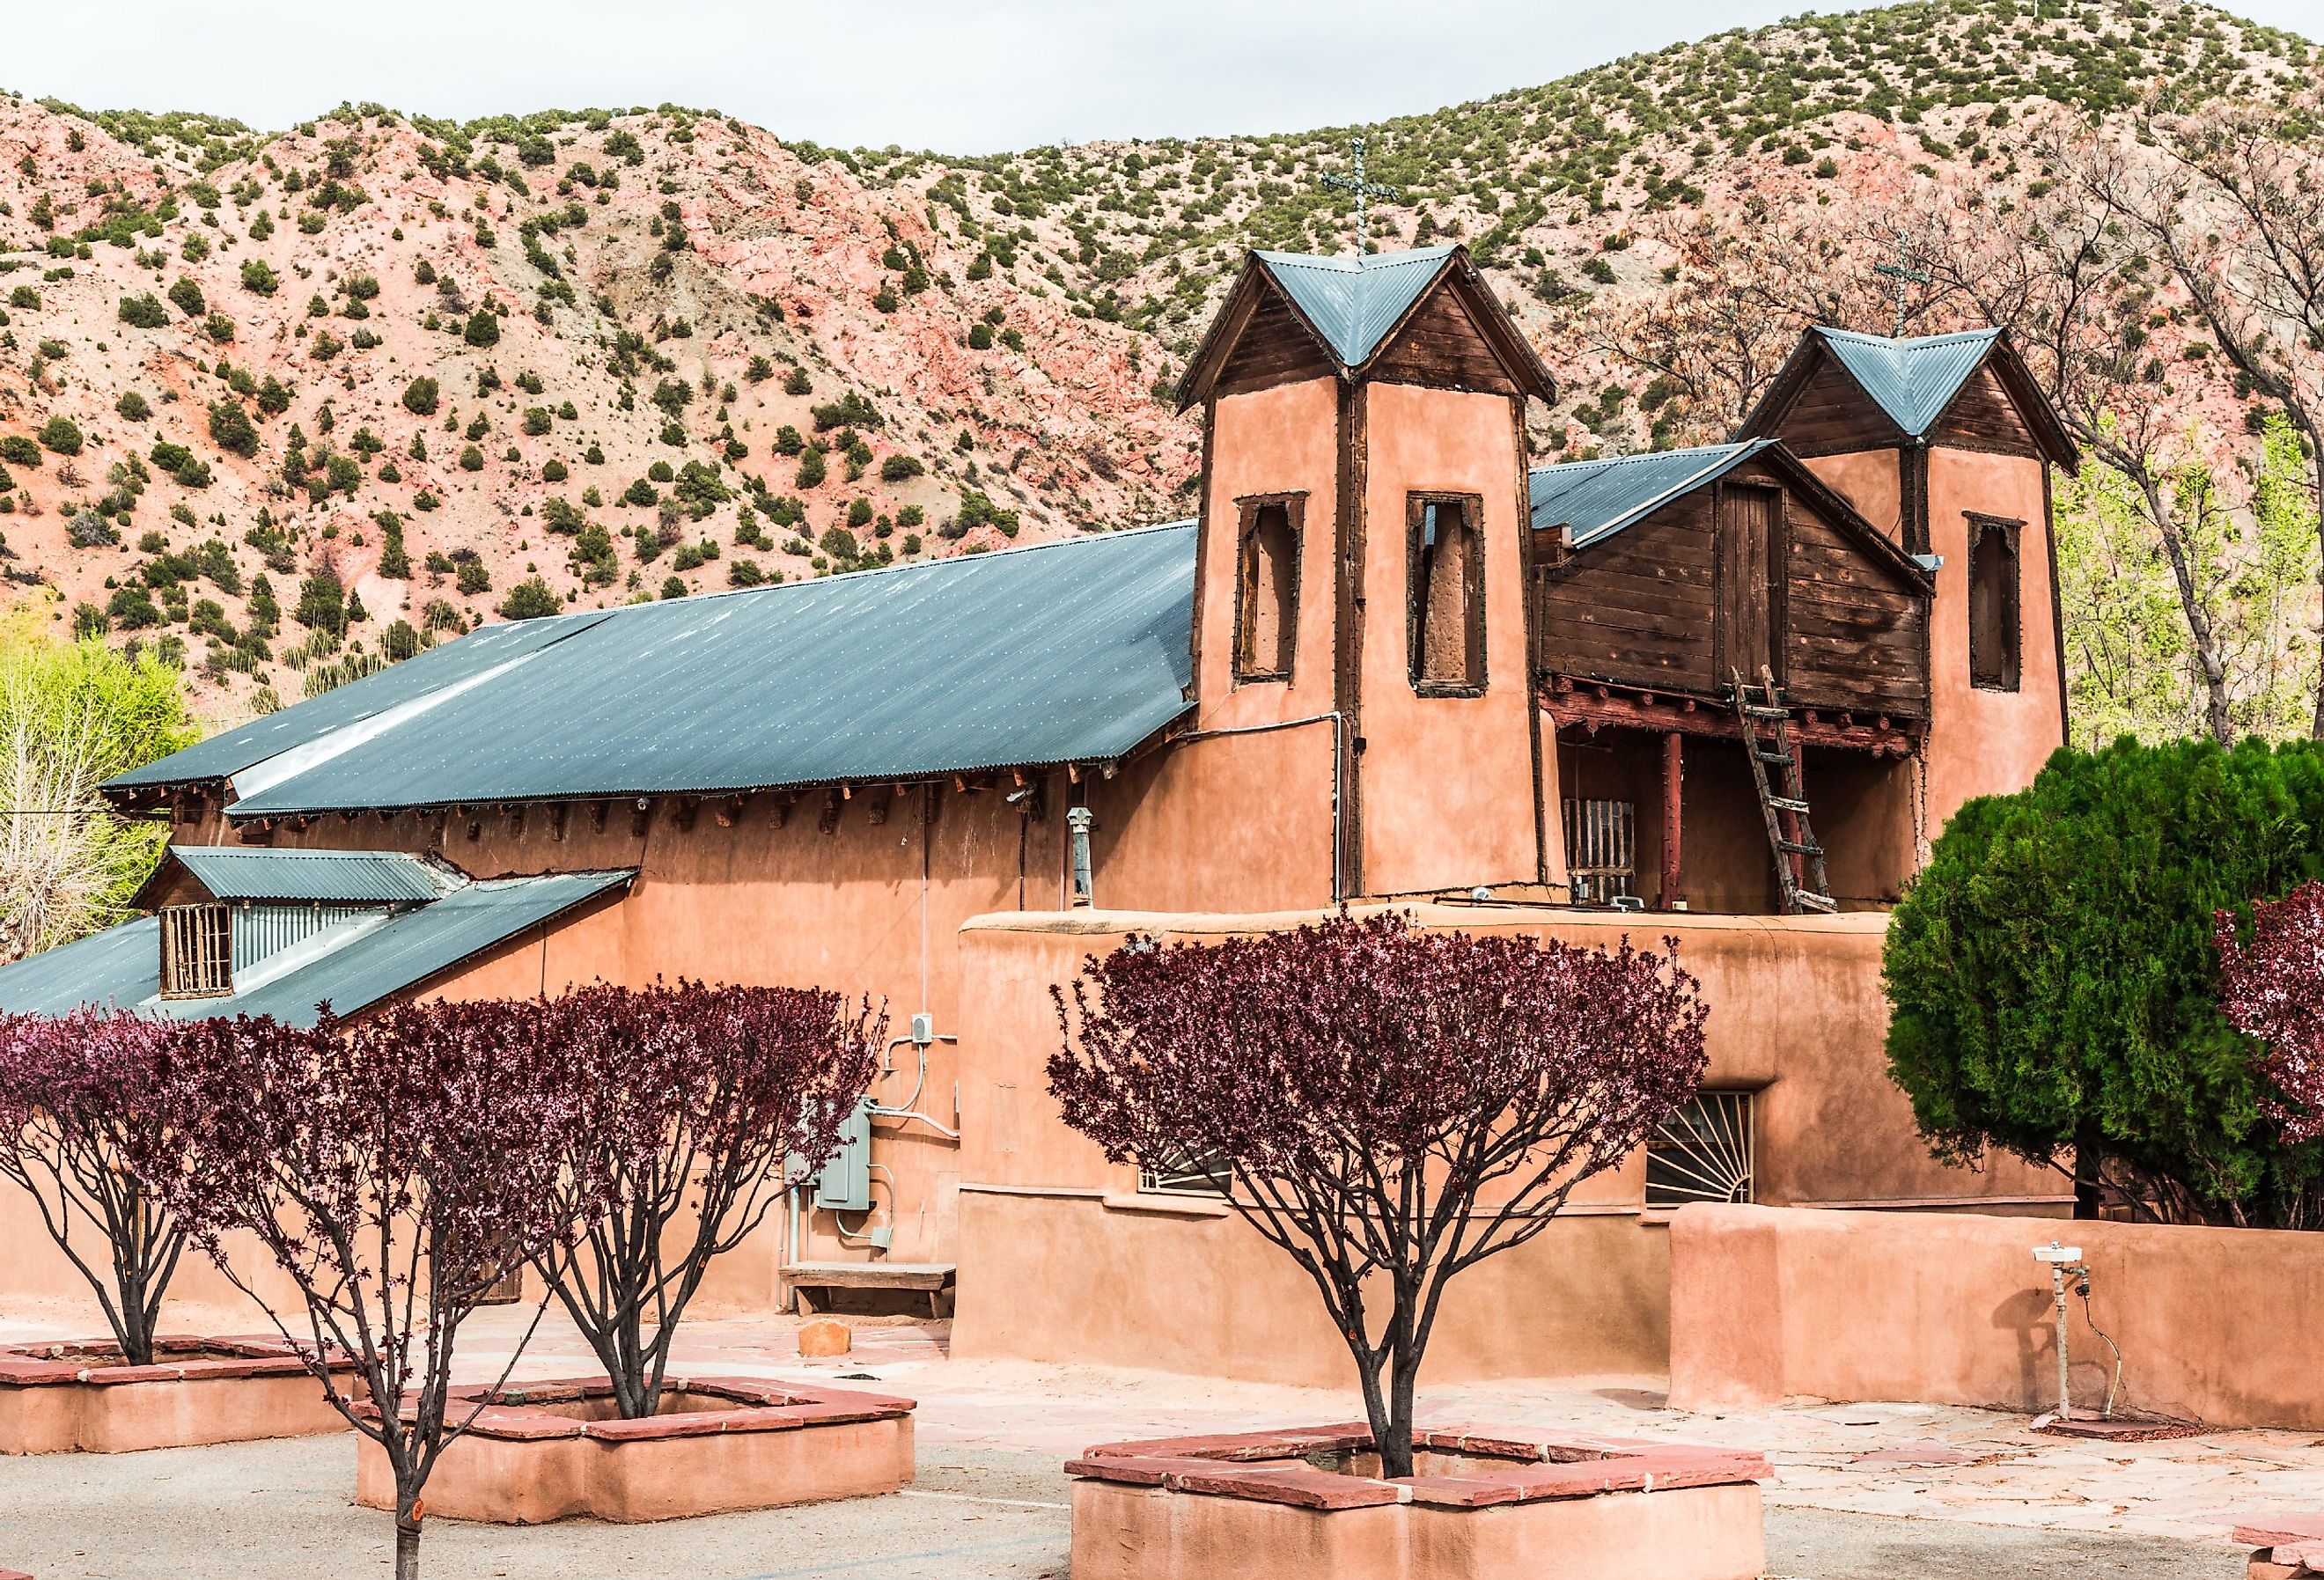 The historic catholic chapel in Chimayo, New Mexico.